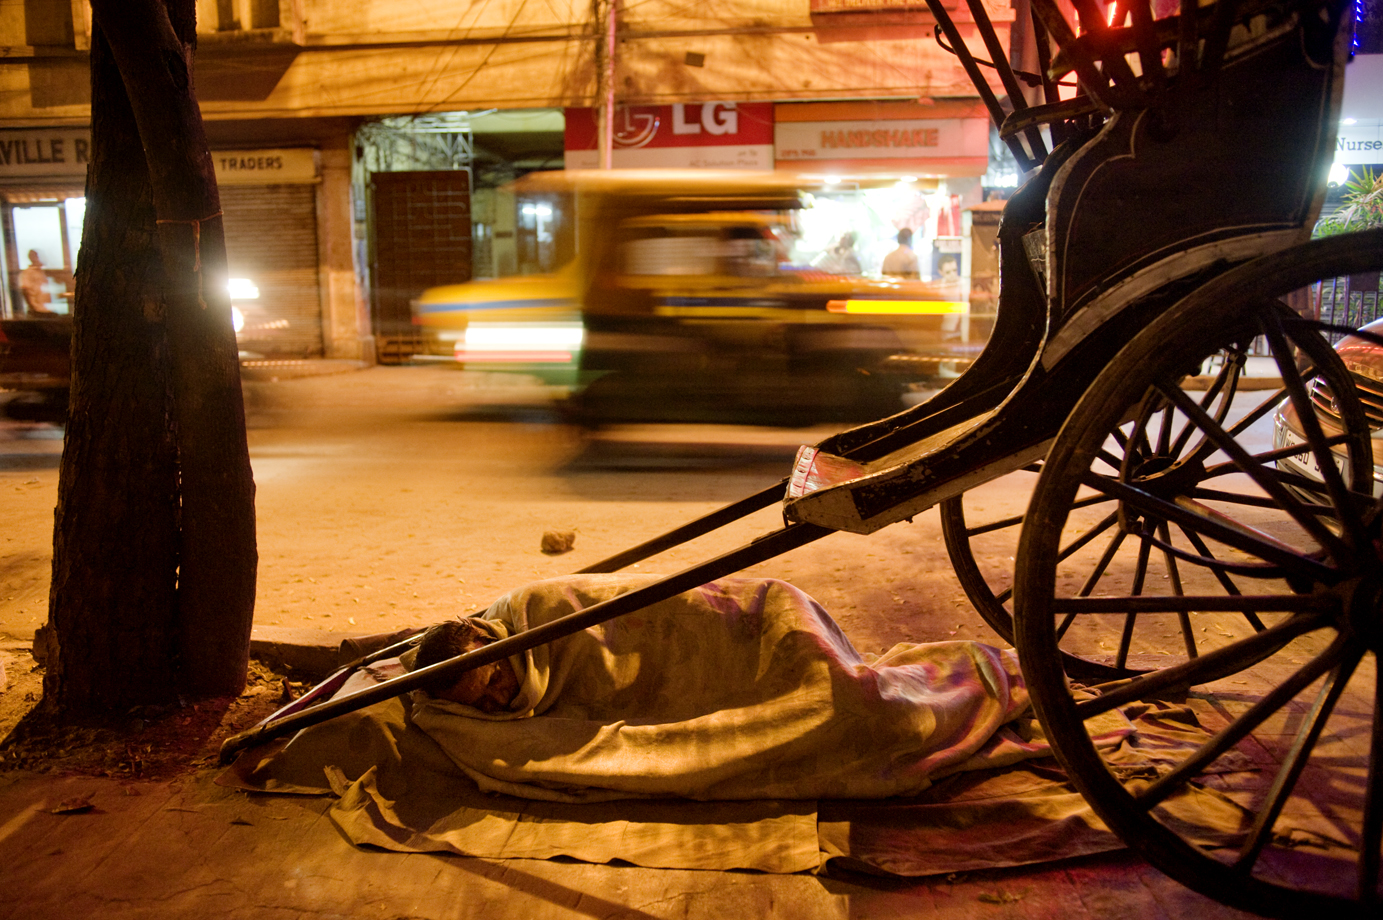  Rickshaw puller sleeping at the street, Calcutta / India  